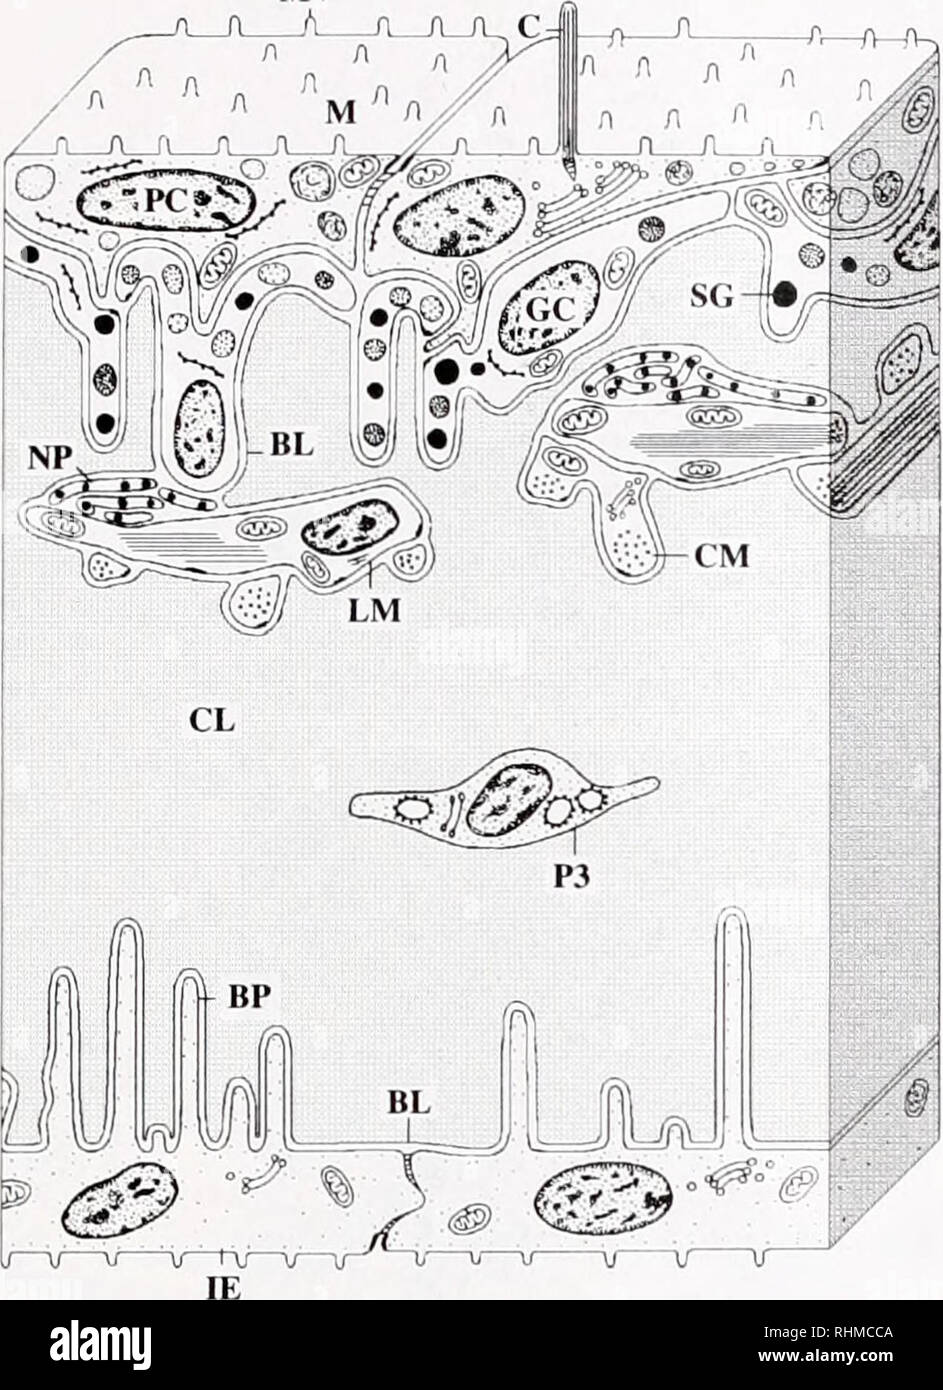 . The Biological bulletin. Biology; Zoology; Biology; Marine Biology. HOLOTHUROID CUVIERIAN TUBULE REGENERATION 43 MV. Figure 2(1. Holothuriu frrxkuli. Reconstruction of a longitudinal sec- tion through the wall of a stage 4 regenerating Cuvierkm tubule (not to scale). BL. basal lamina; BP. epithelial cell basal process; C, cilium: CL. connective tissue layer; CM. circular myocyte; IE. internal epithelium; GC. granular cell; LM, longitudinal myocyte; M. mesothelium; MV. microvil- lus; NP, nerve plexus; P3. type 3 pseudopodial cell; PC. peritoneocyte: SG, secretory granule. mesothelium. prolife Stock Photo